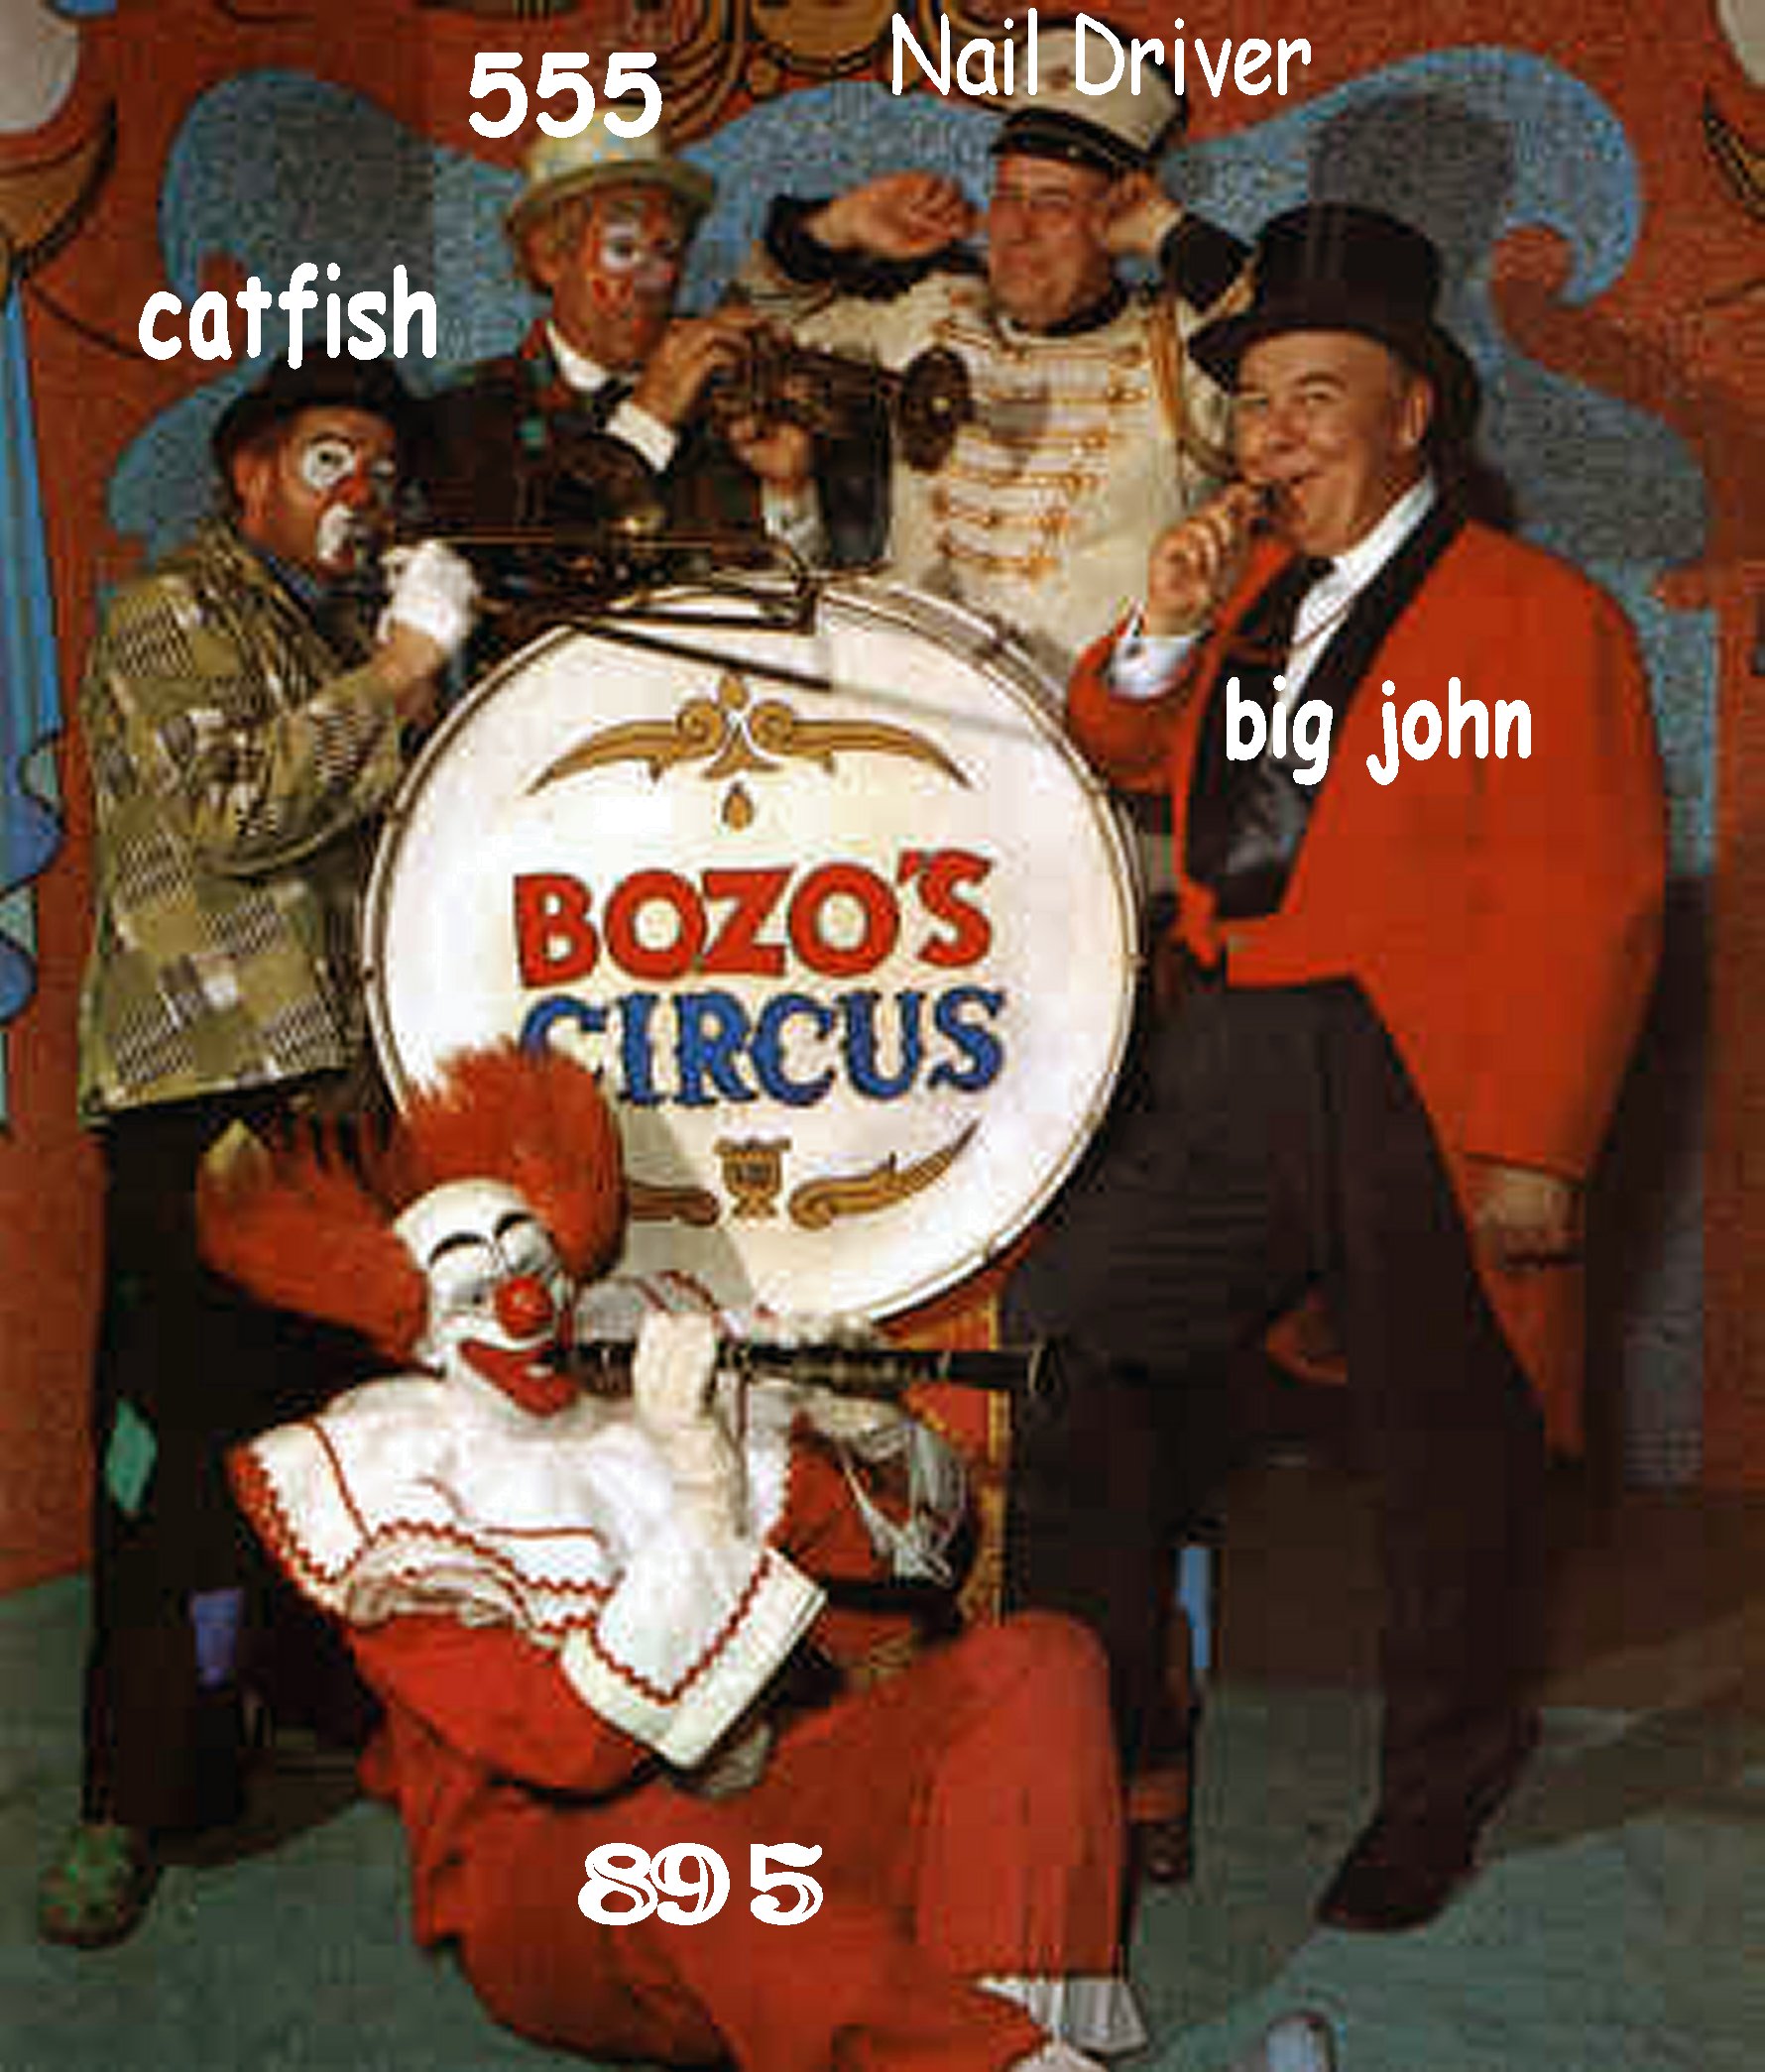 Bozo's CB radio circus